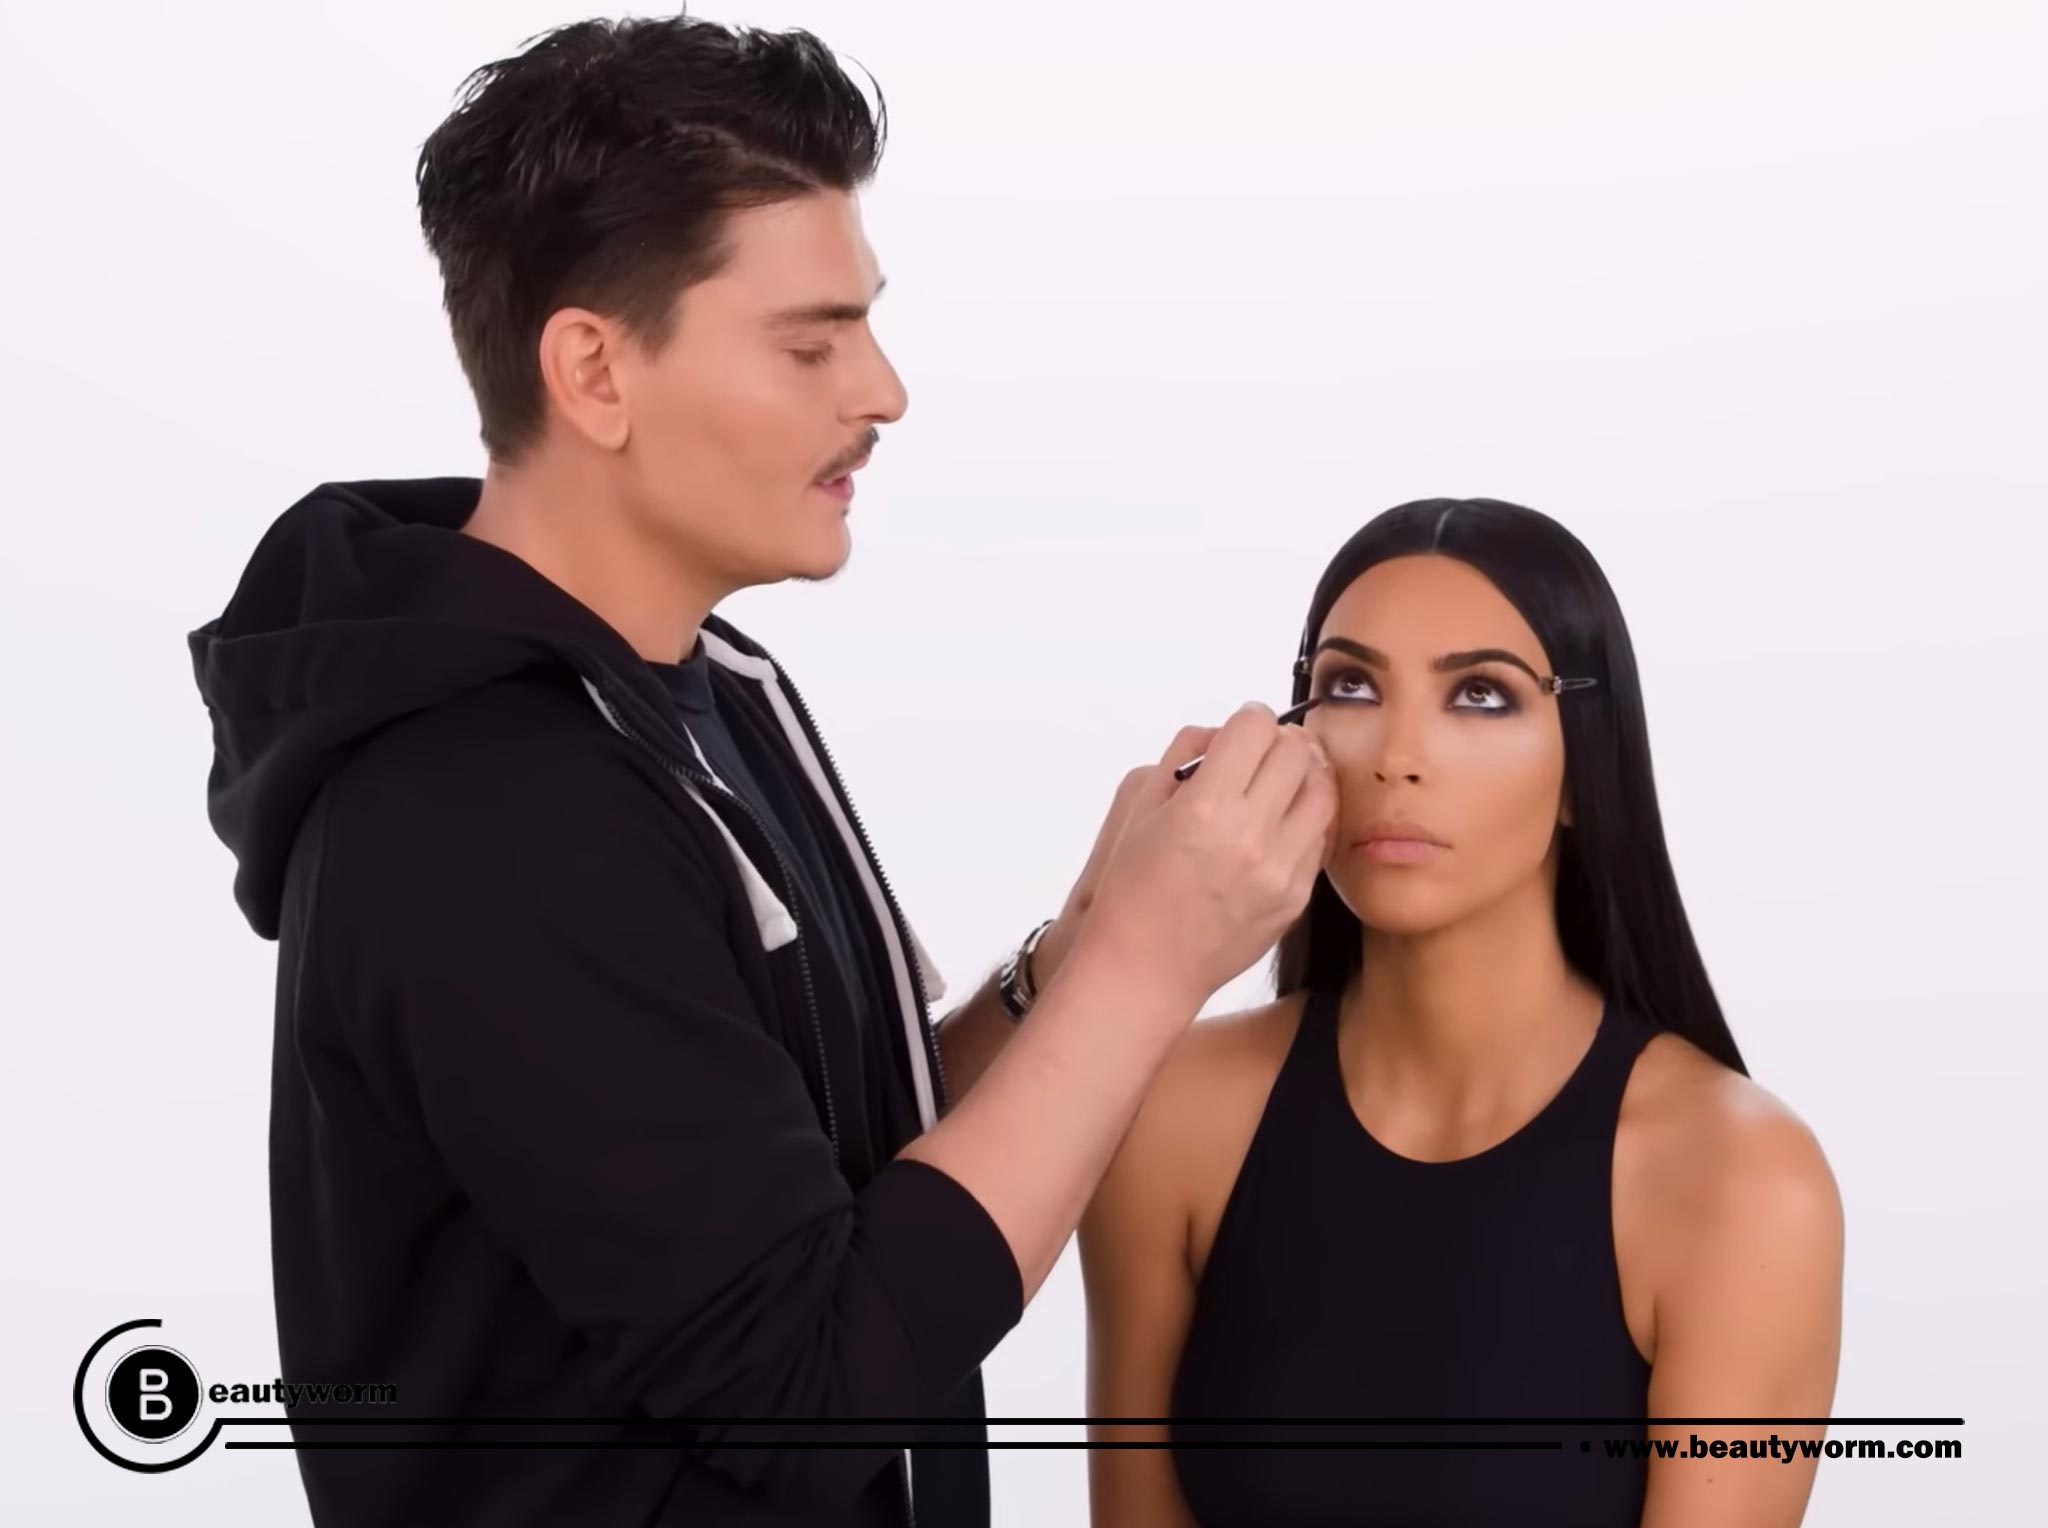 Kim Kardashian smokey eye makeup is typically created using a combination of matte and shimmery eyeshadows in deep, smokey tones.